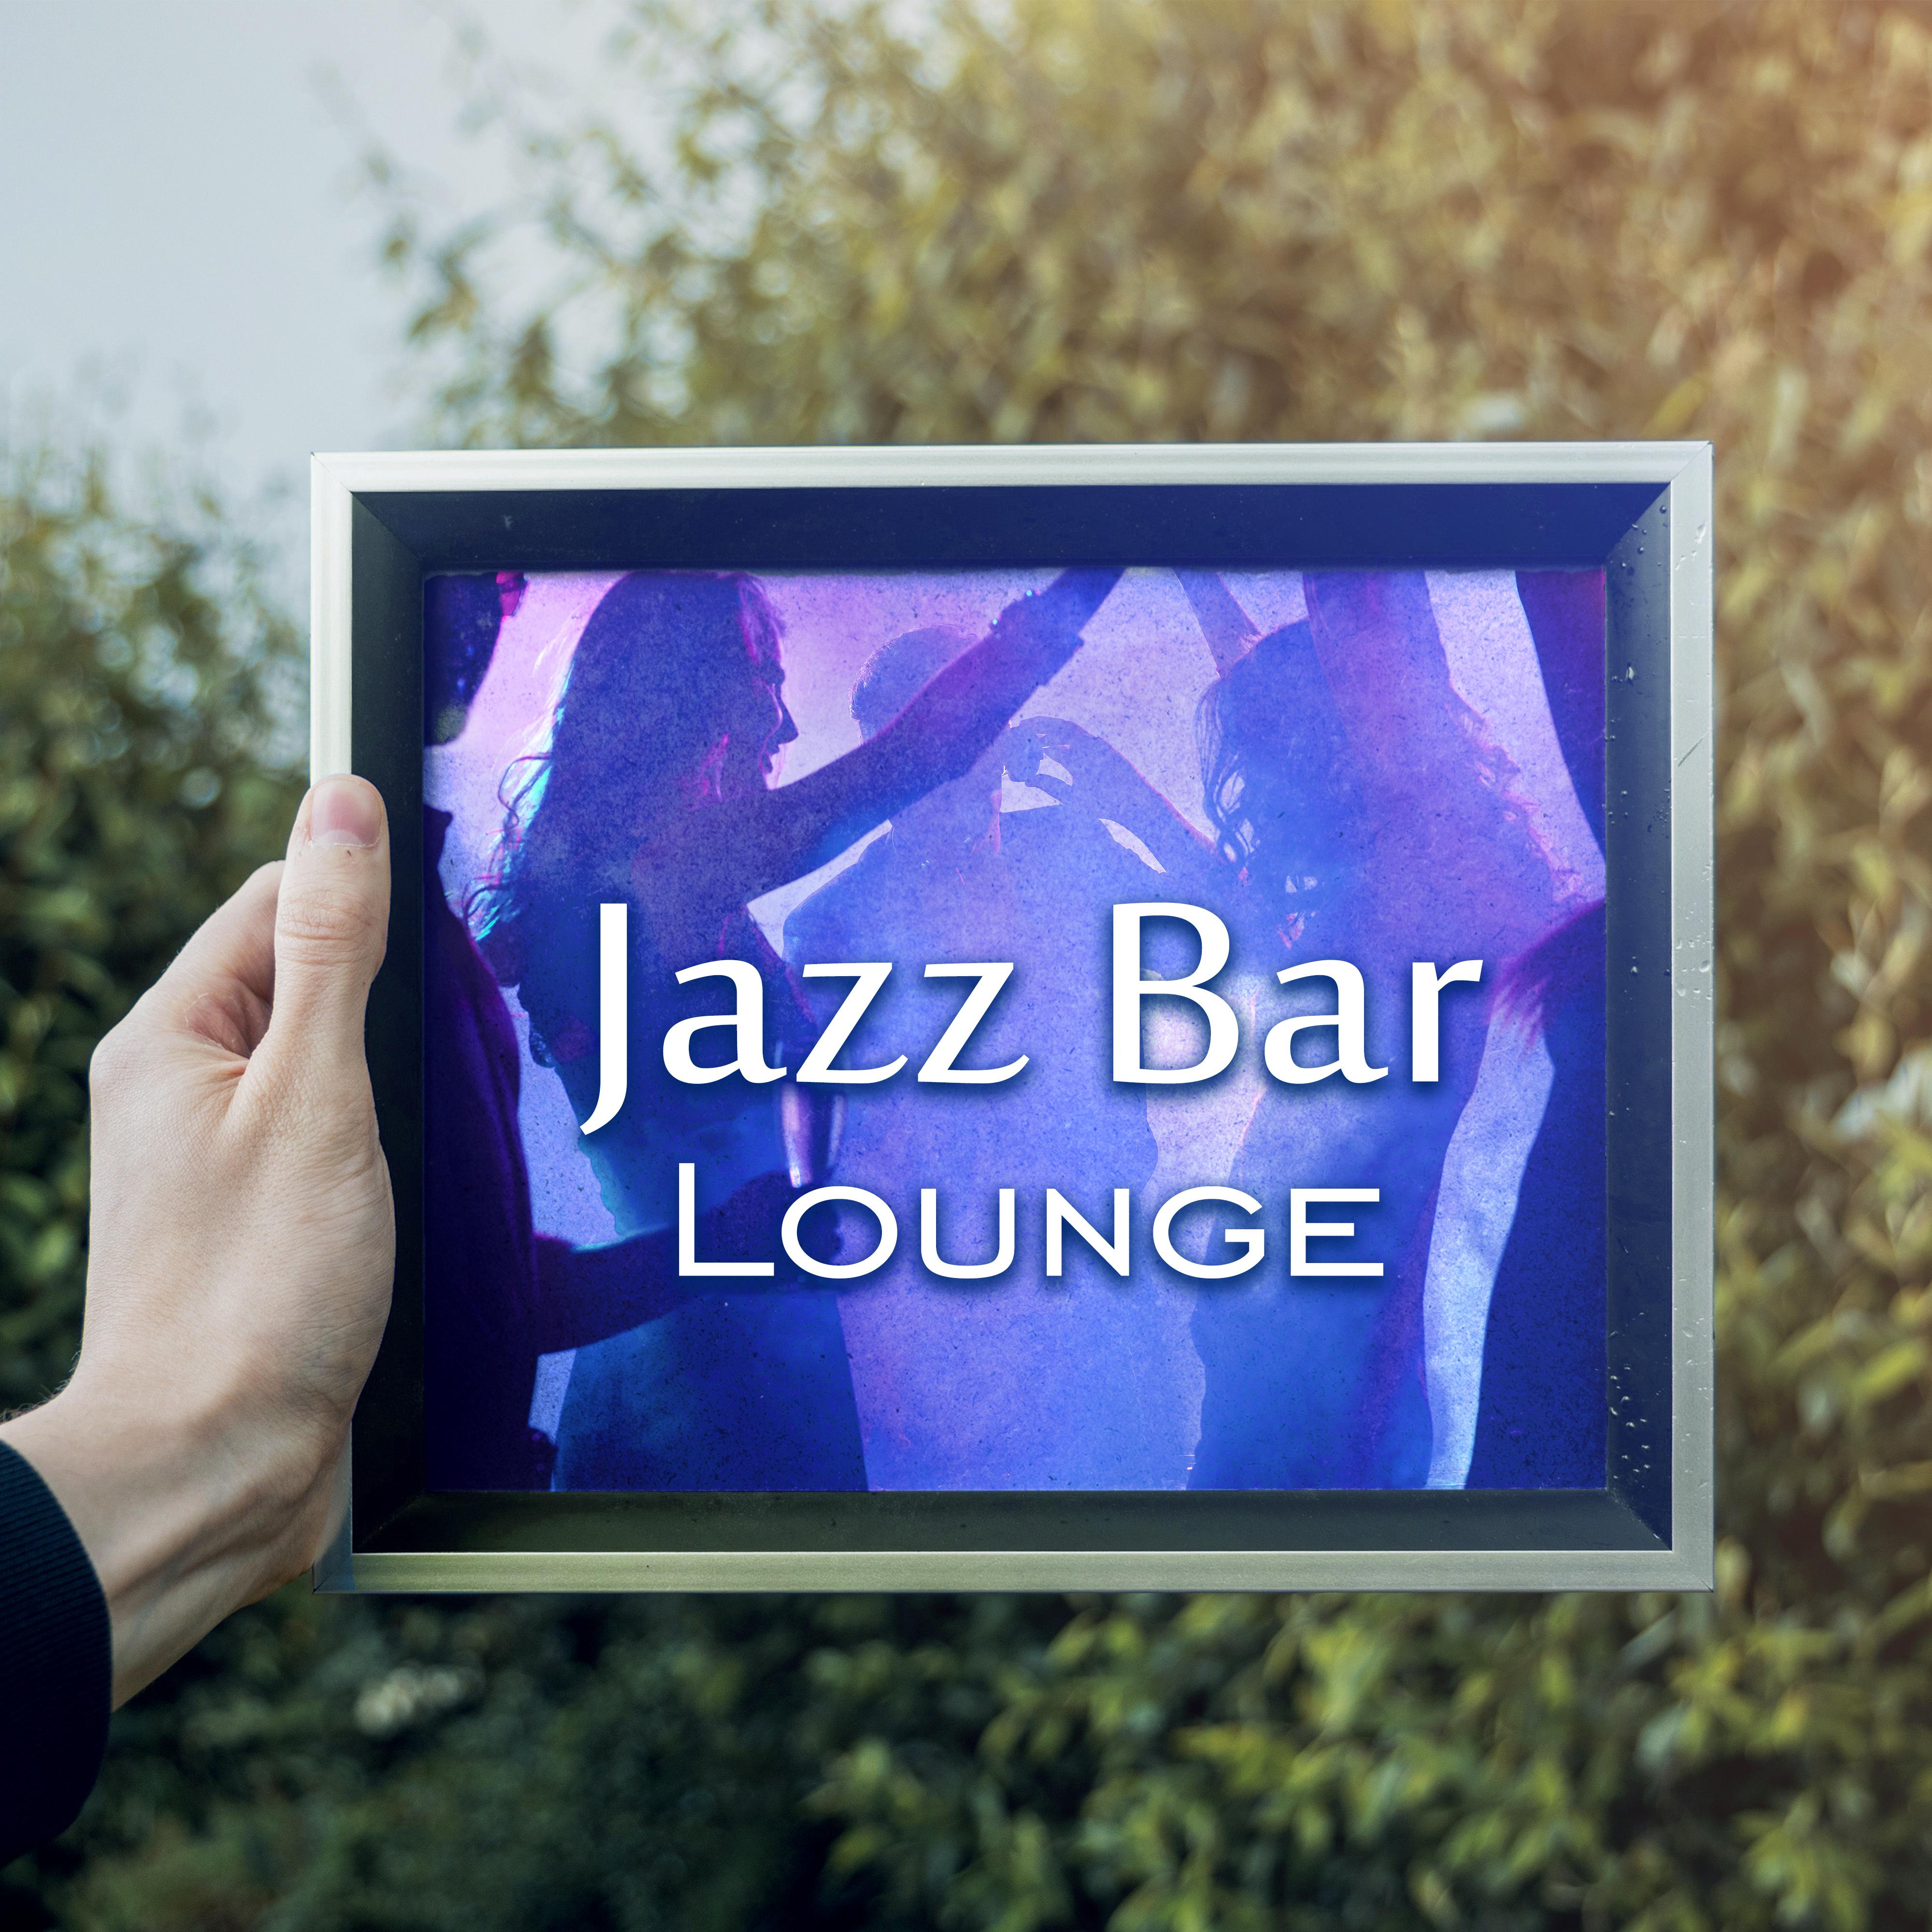 Jazz Bar Lounge  Smooth Jazz 2017, Restaurant  Cafe Music, Jazz Club, Ambient Instrumental